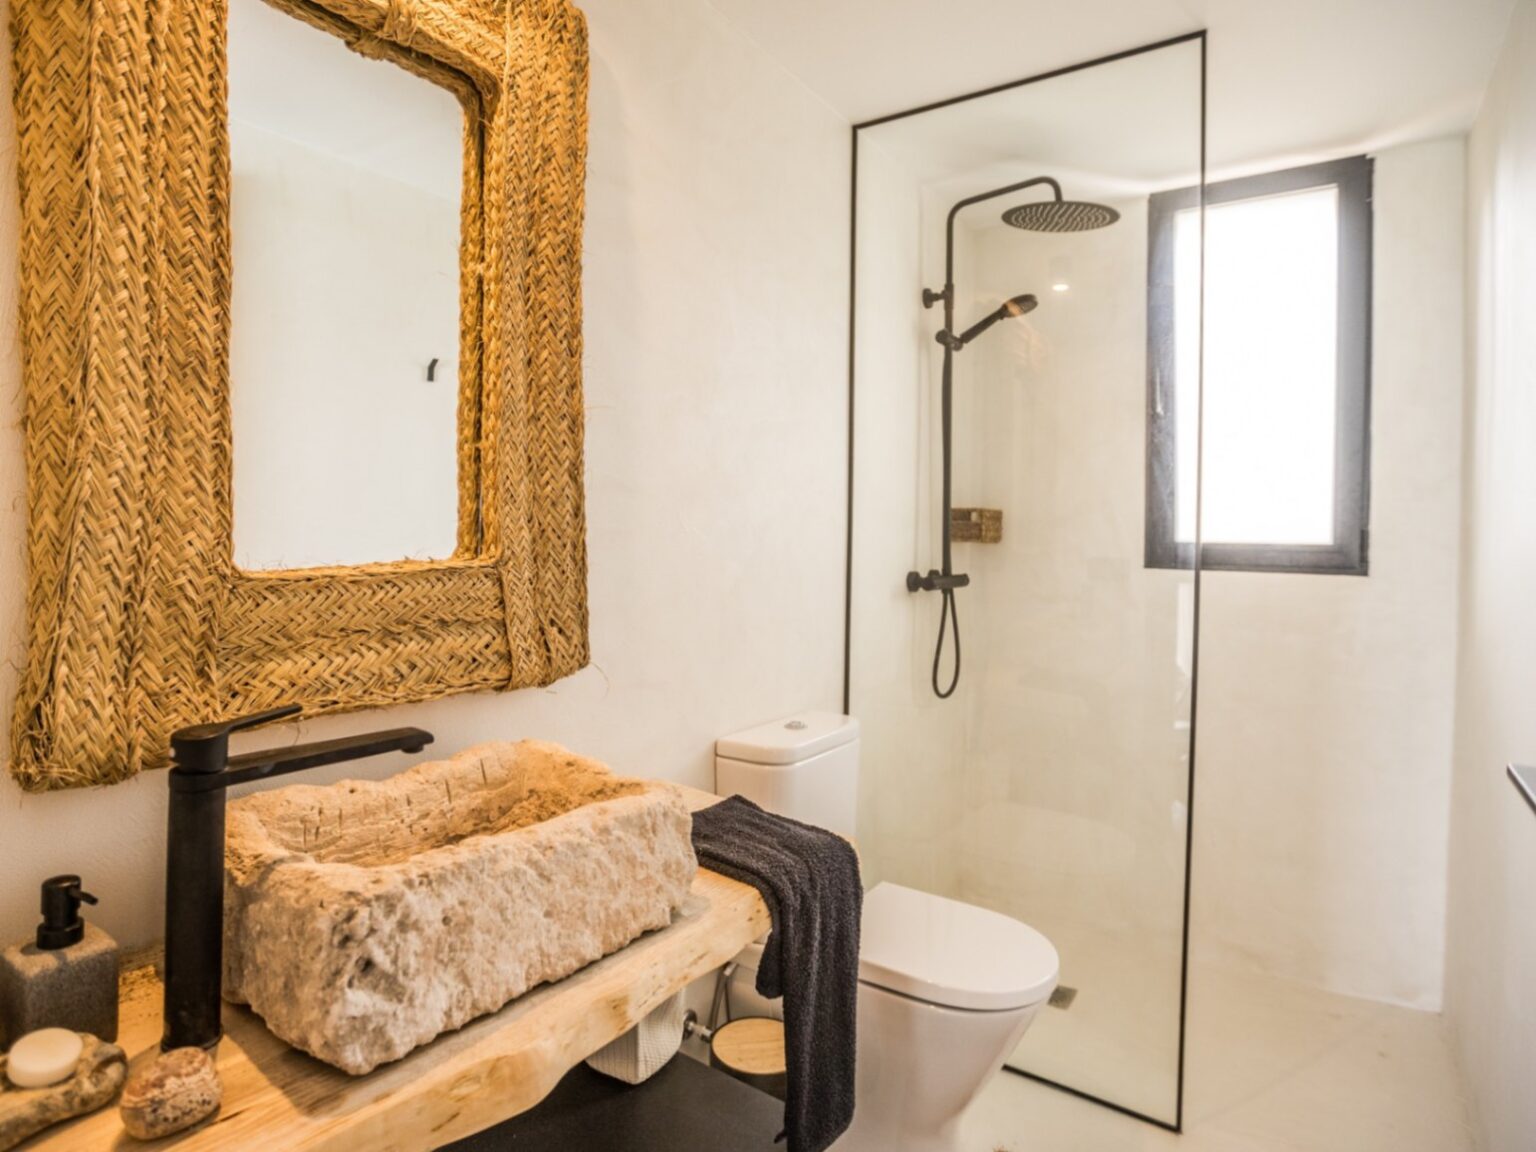 Superbe Villa 4 chambres de style Ibicenco à vendre à Javea